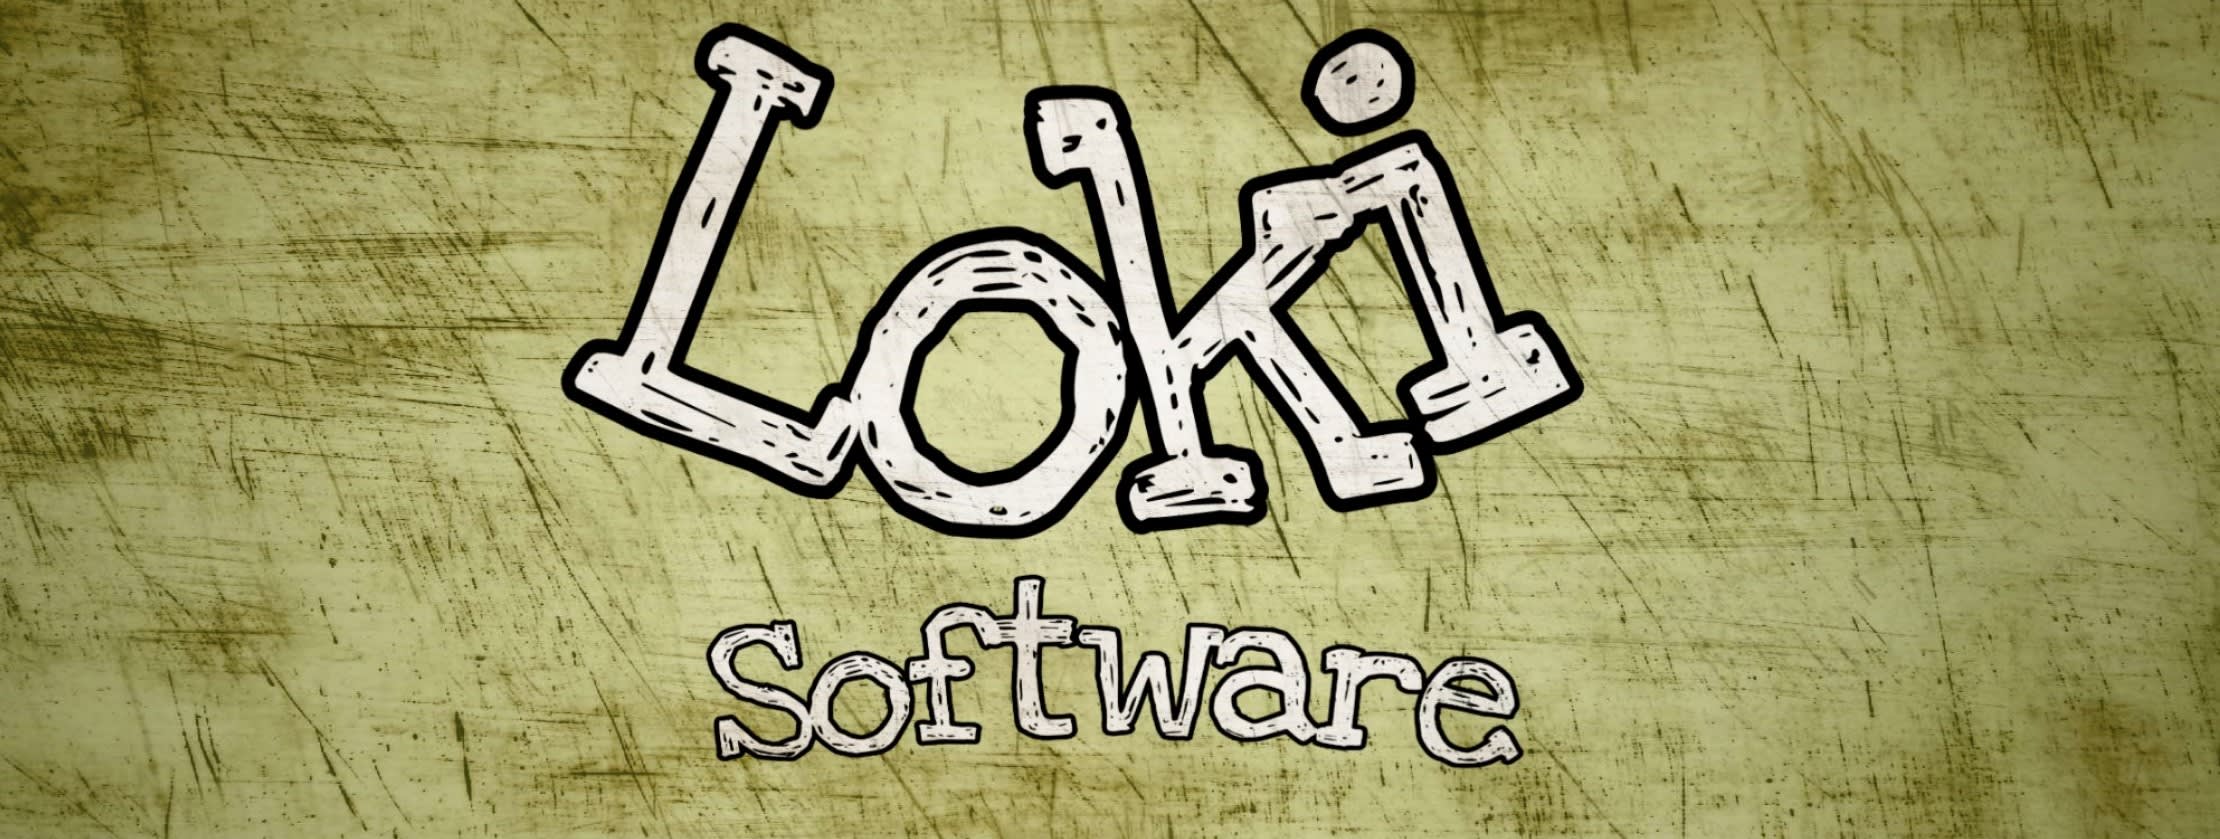 Loki Software